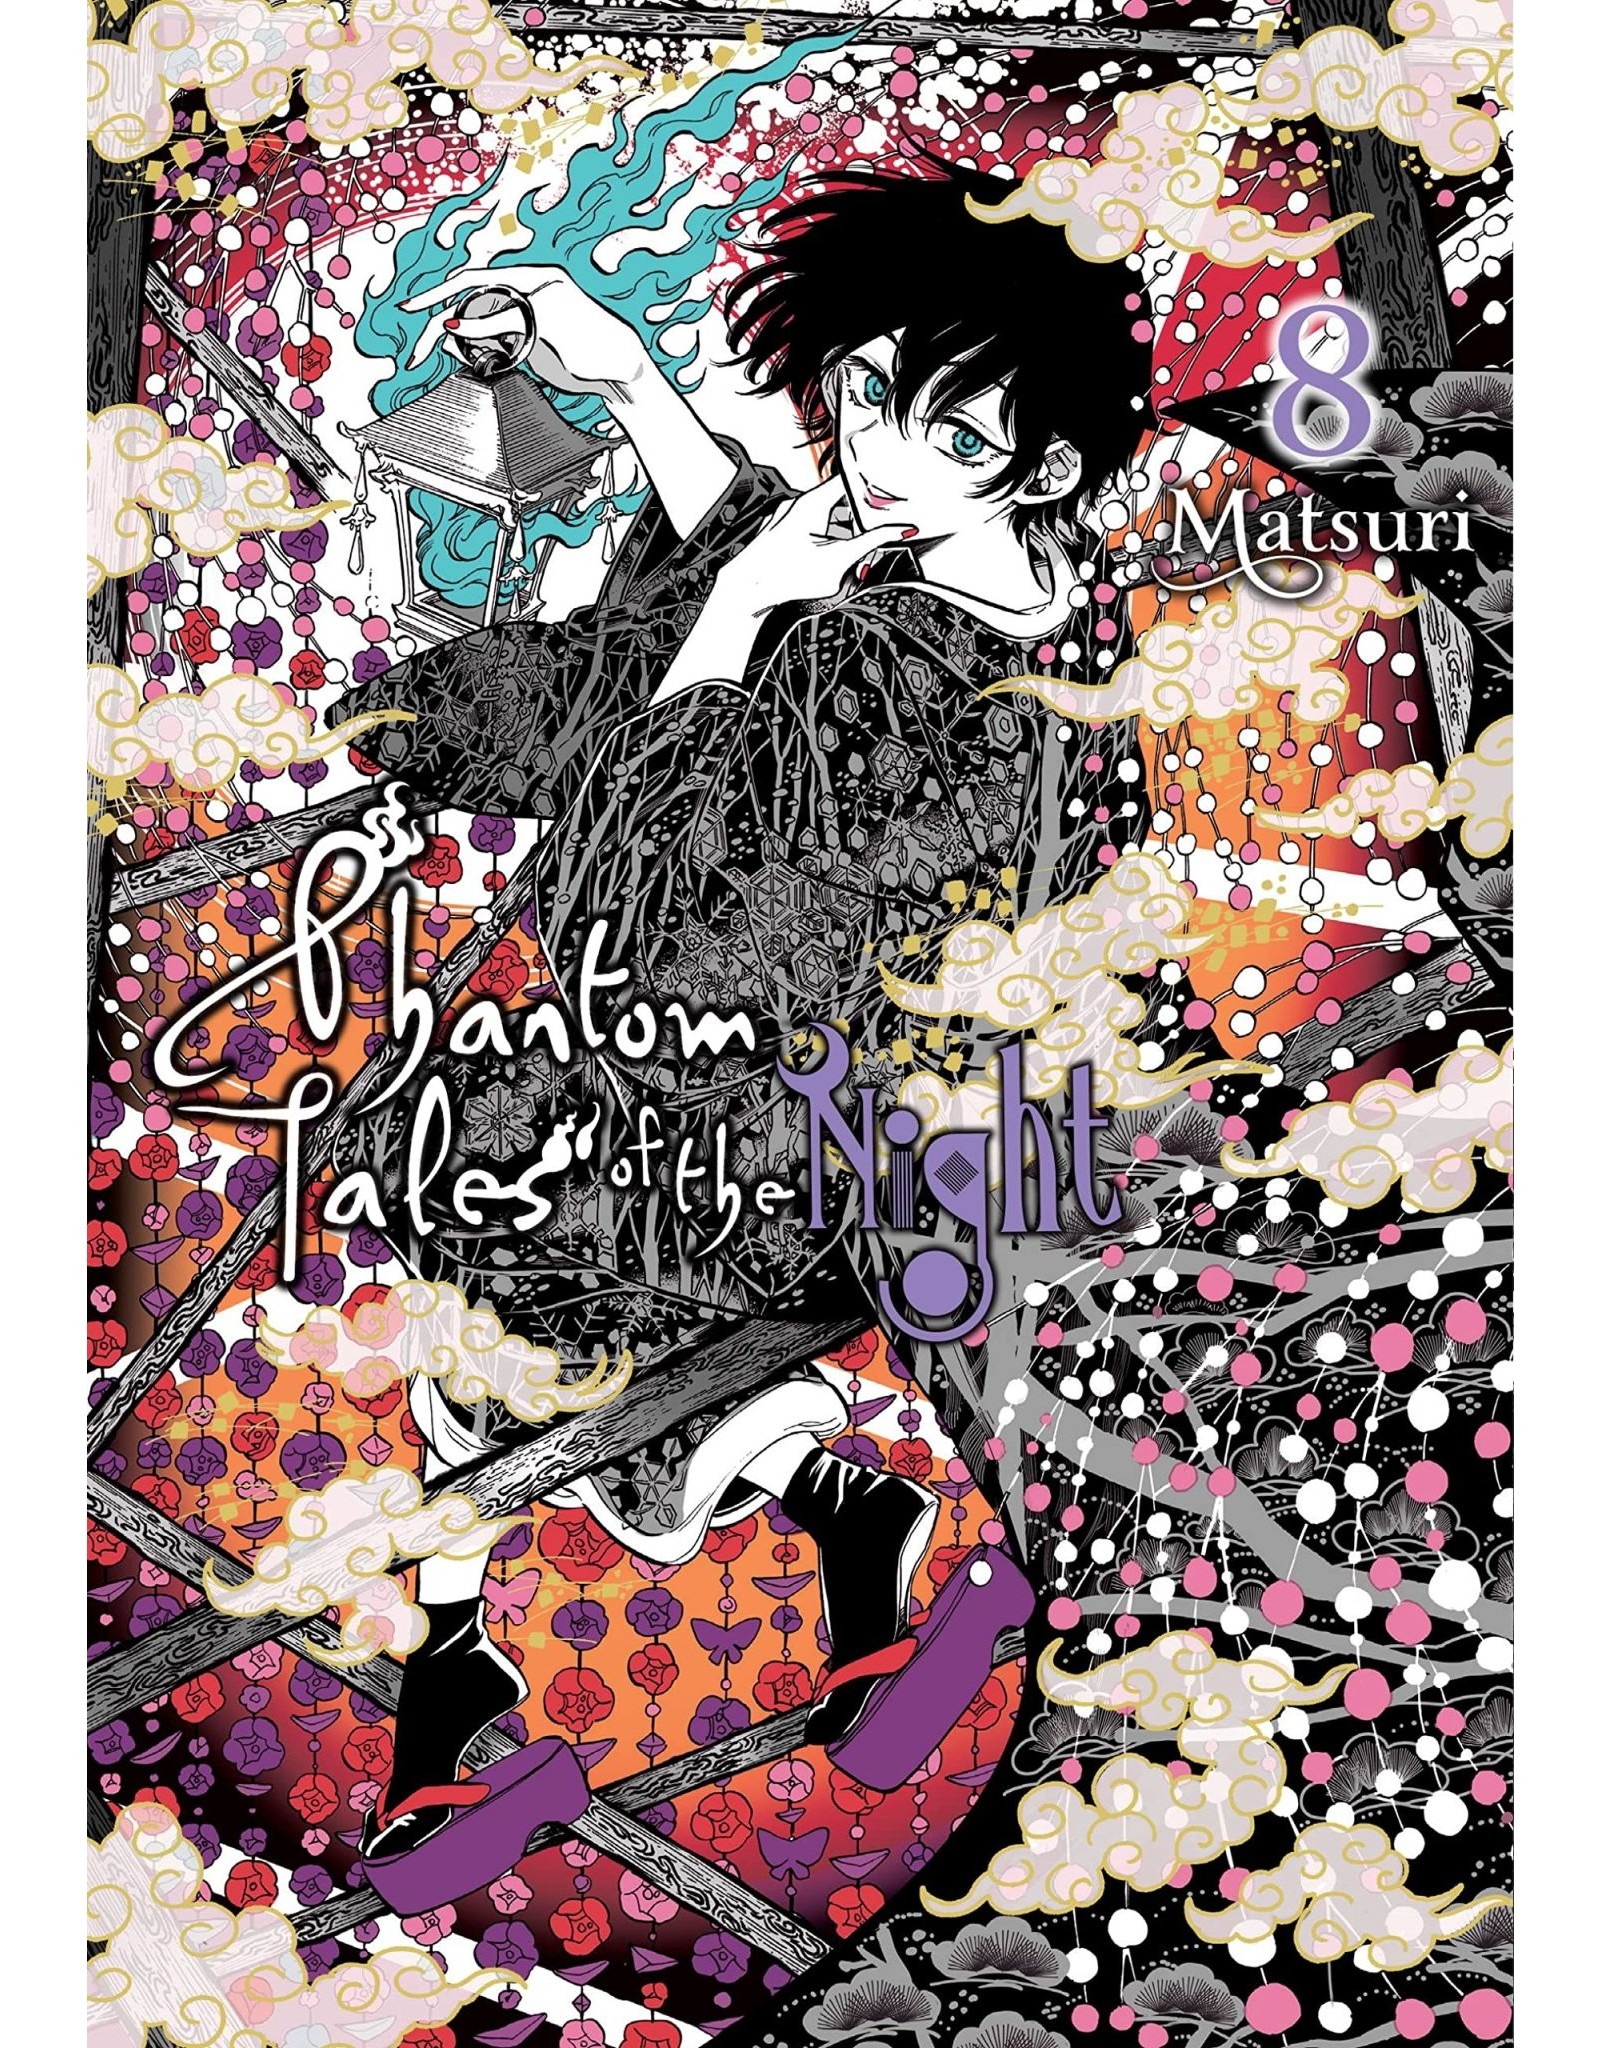 Phantom Tales of The Night 08 (English) - Manga